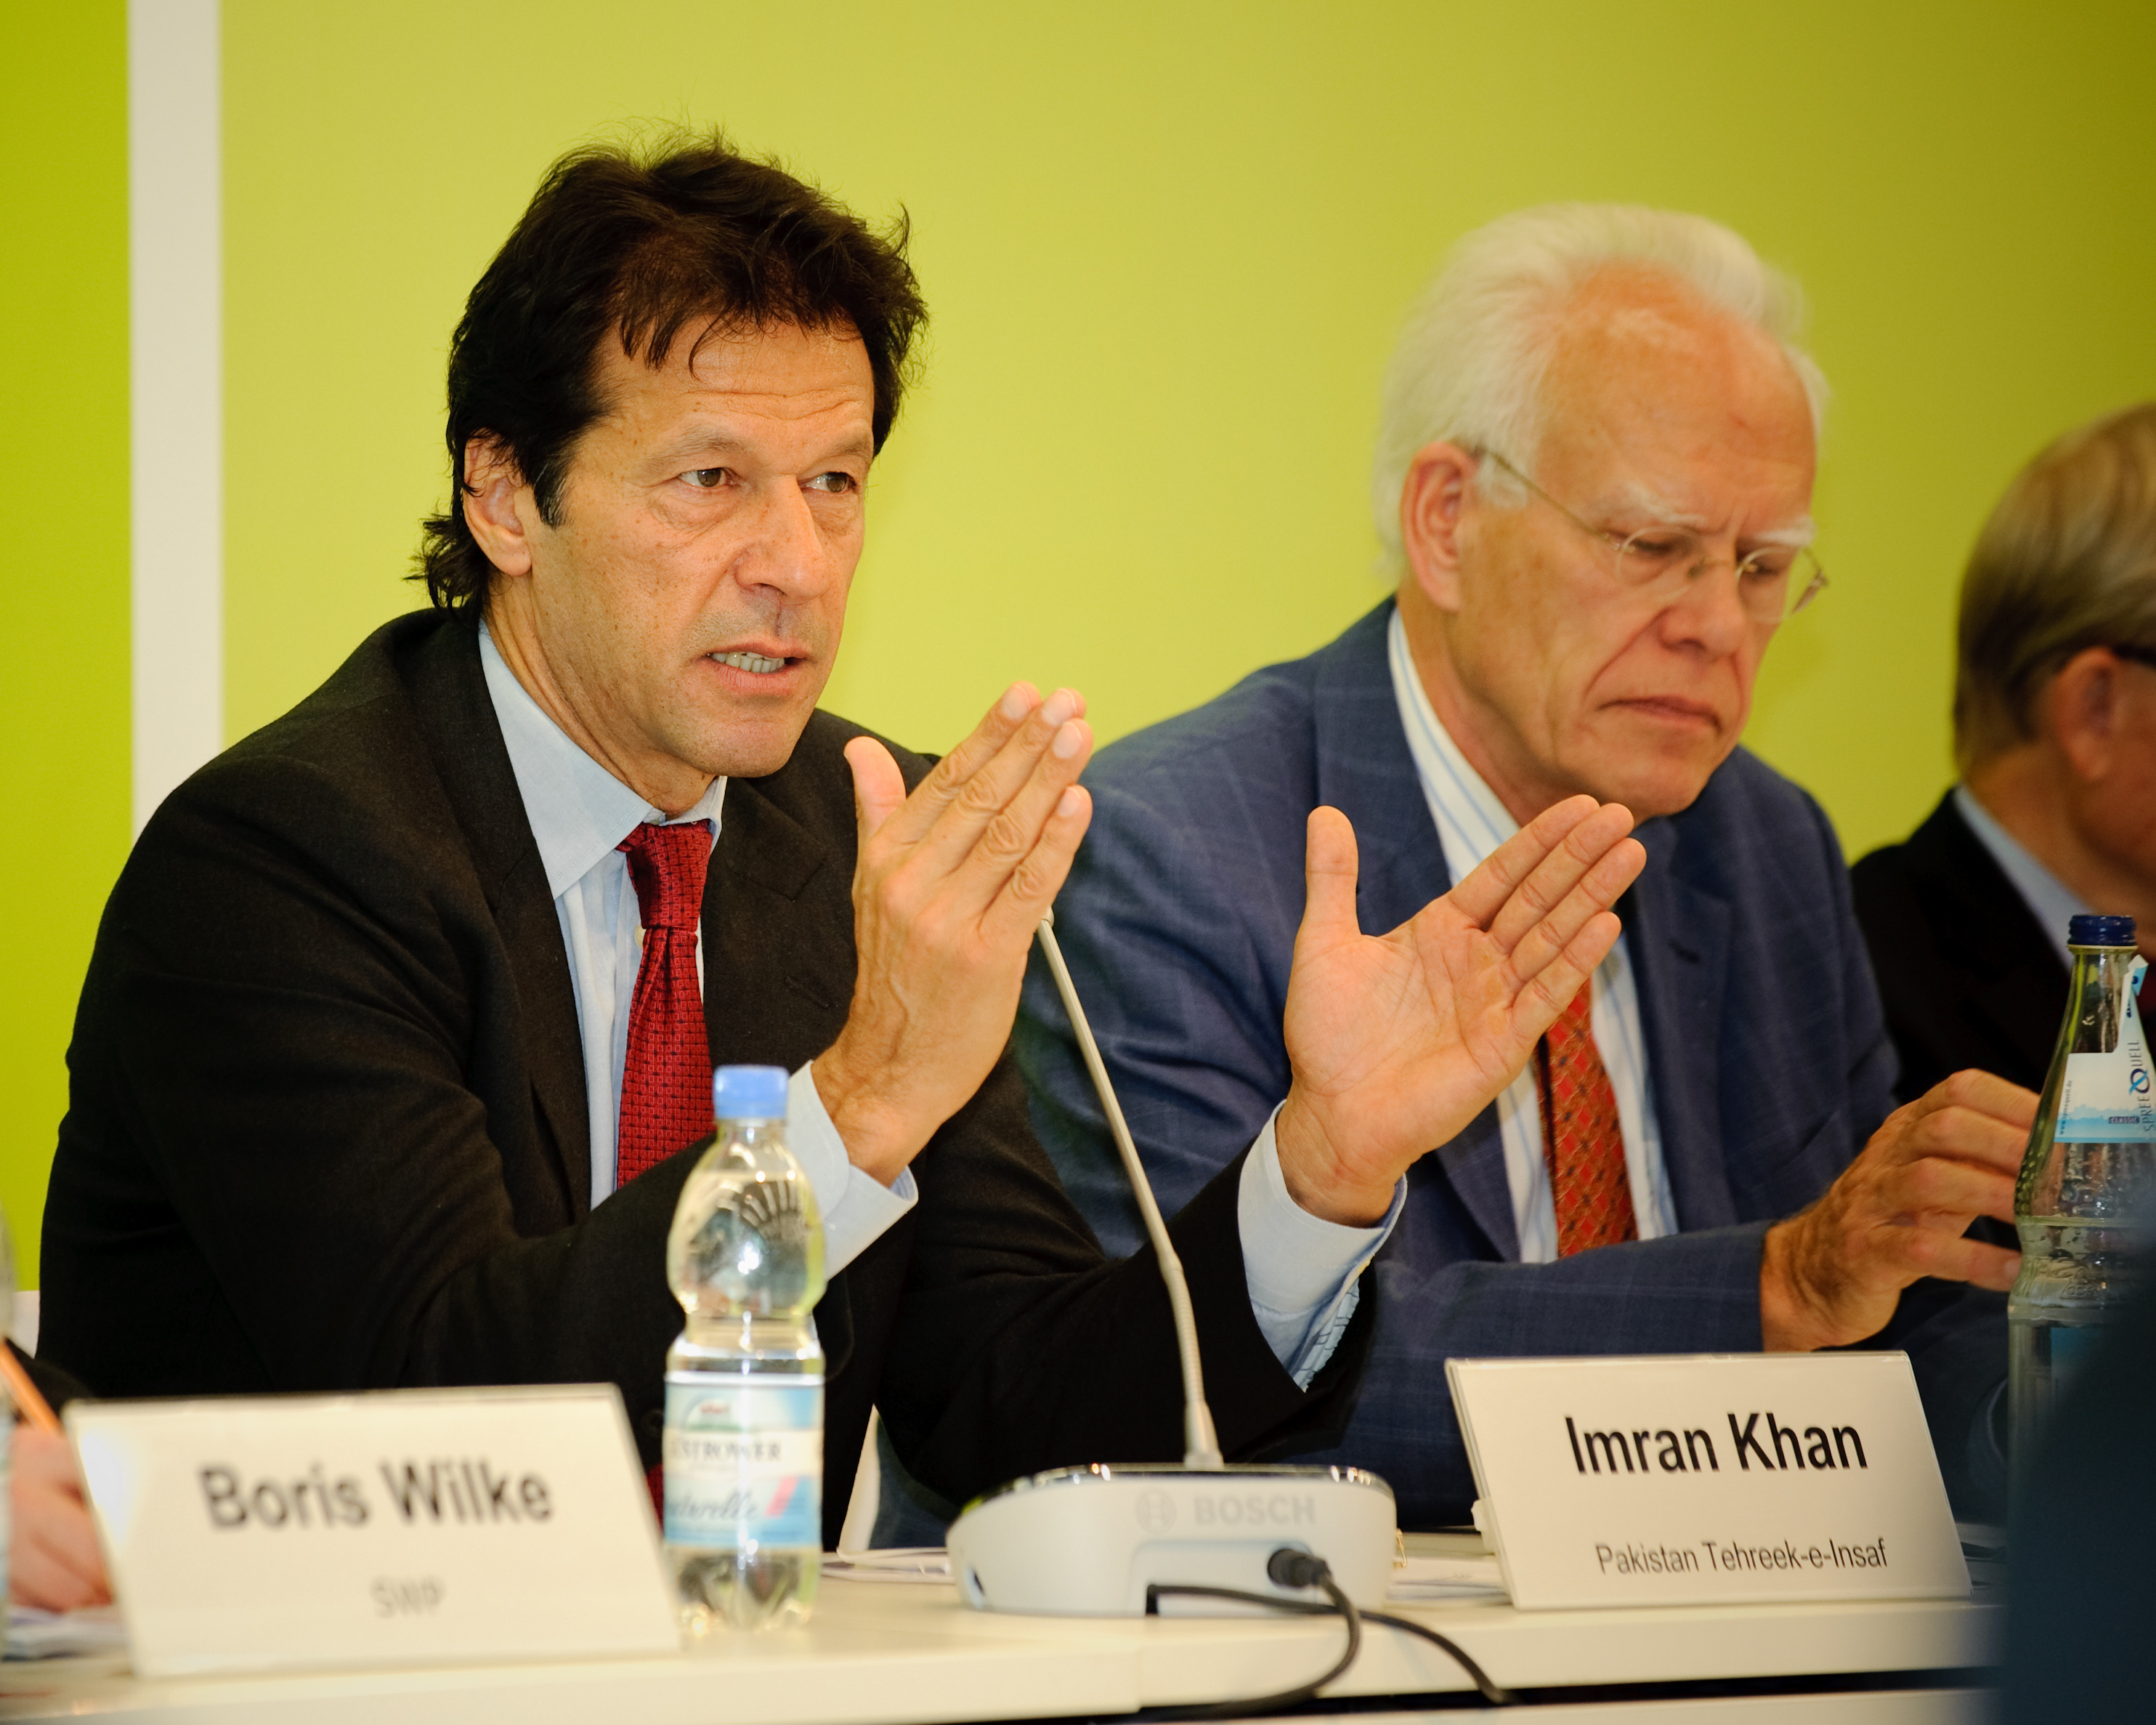 Prime Minister Imran Khan of Pakistan (photo credit: Heinrich-Böll-Stiftung/flickr)